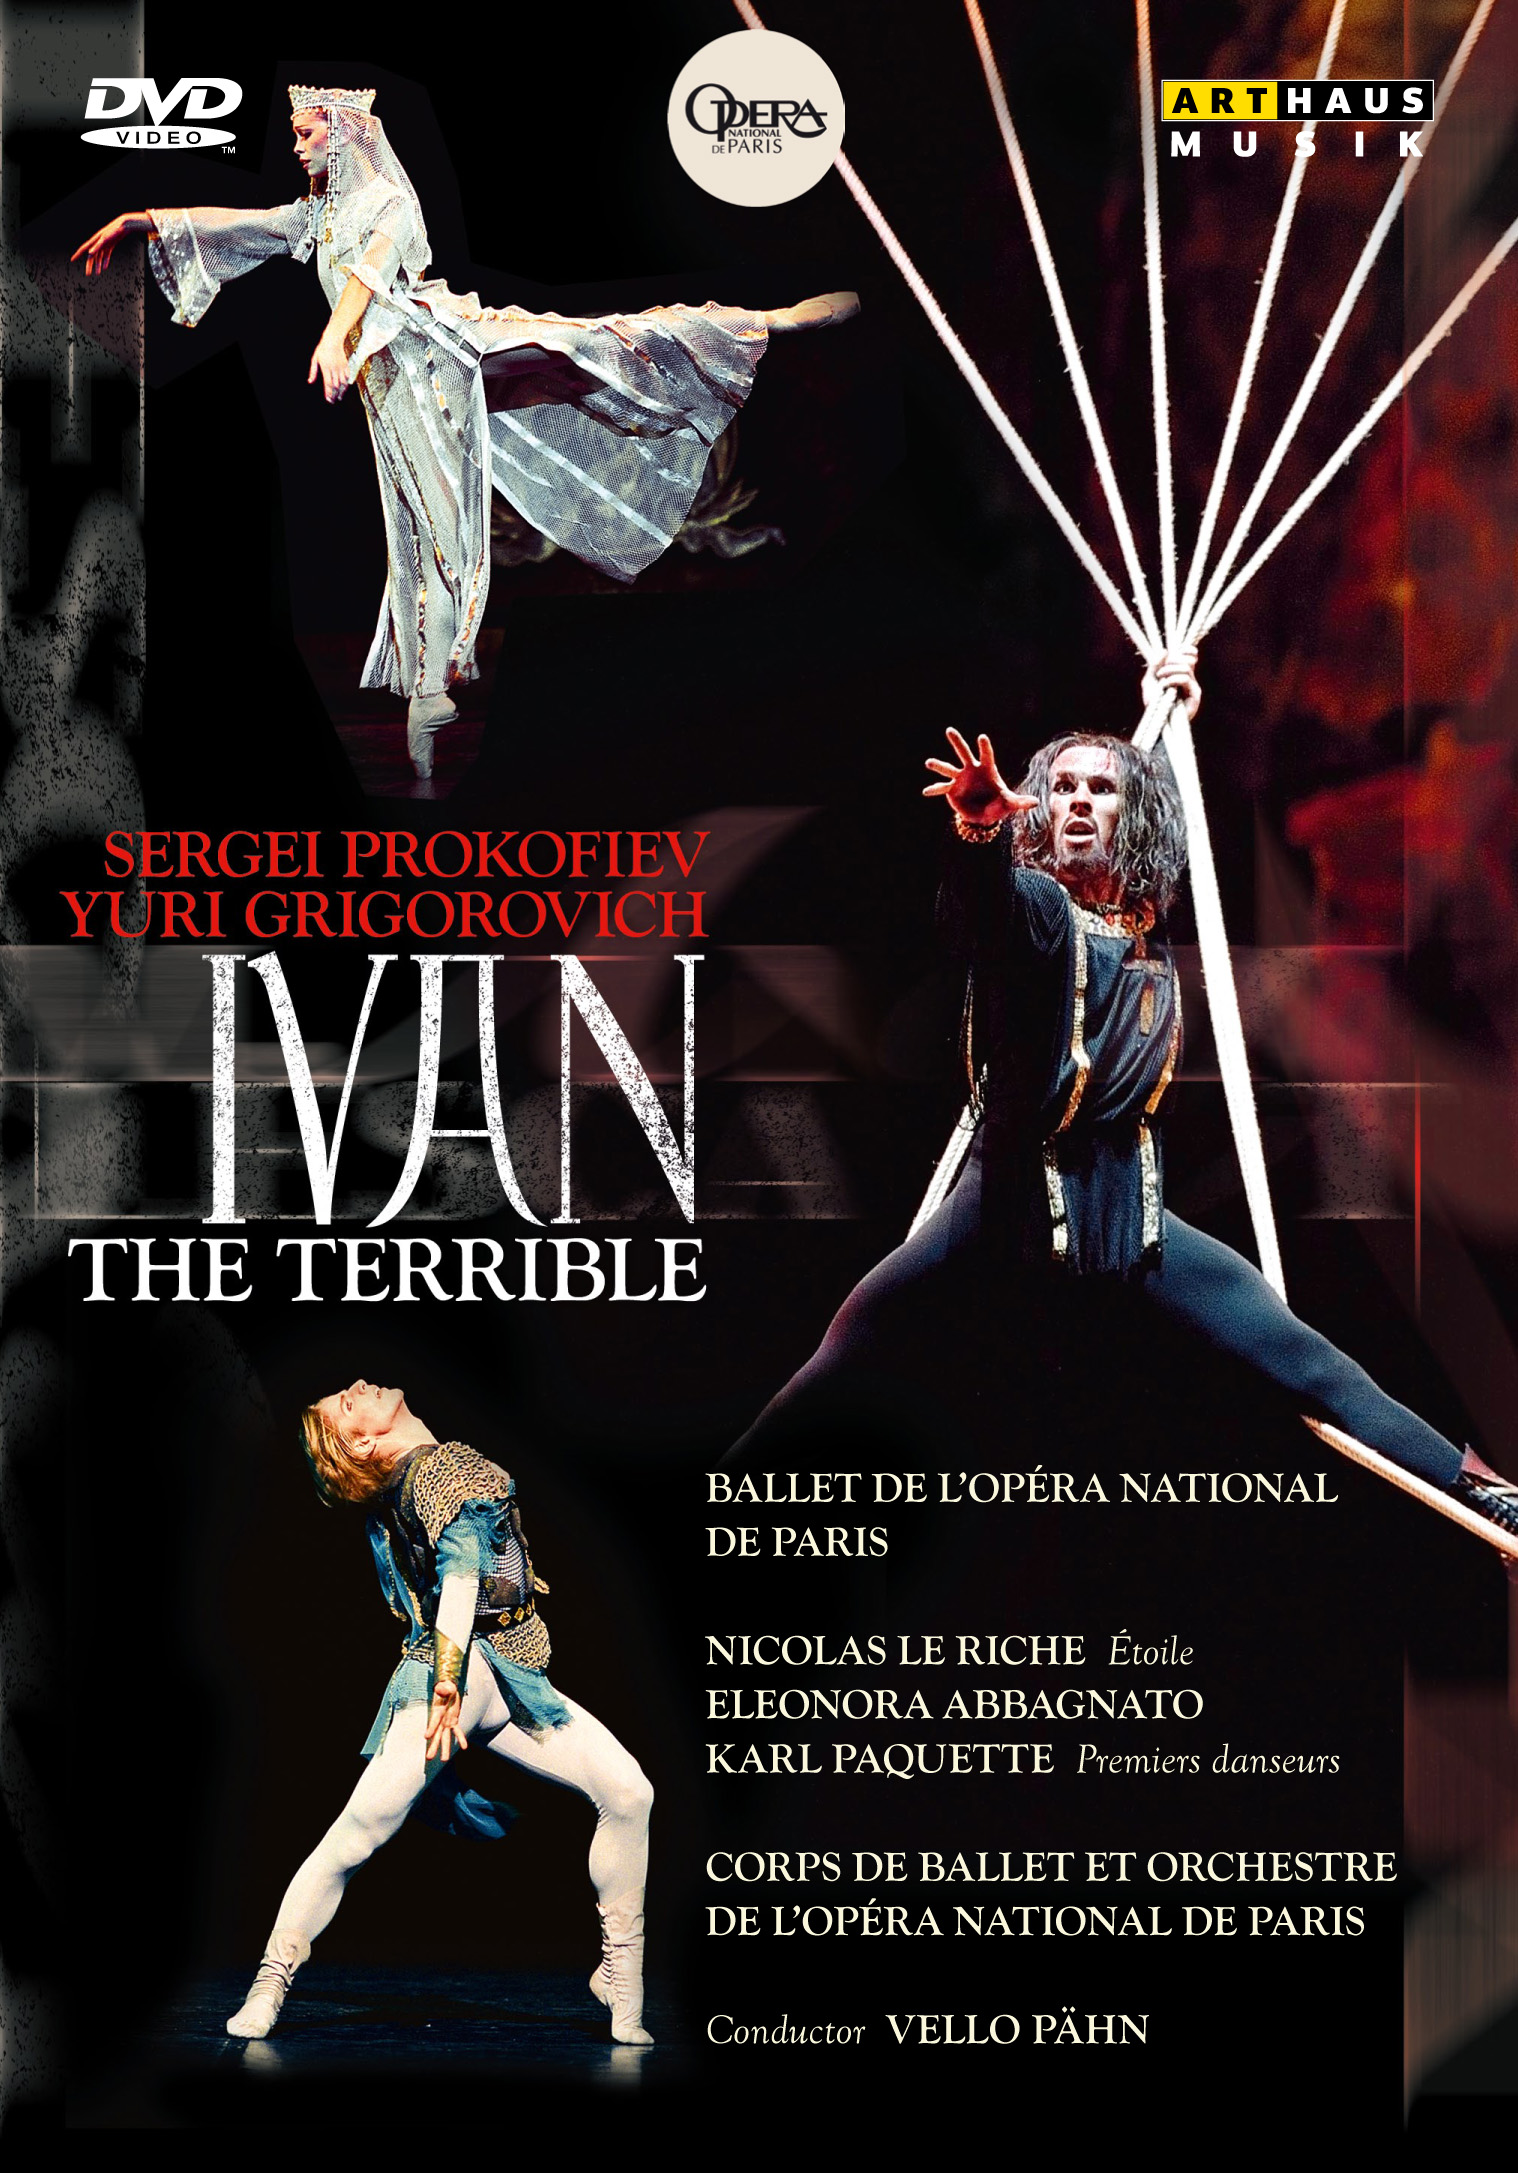 DVD Prokofiev - Ivan, The Terrible - Yuri Grigorovich